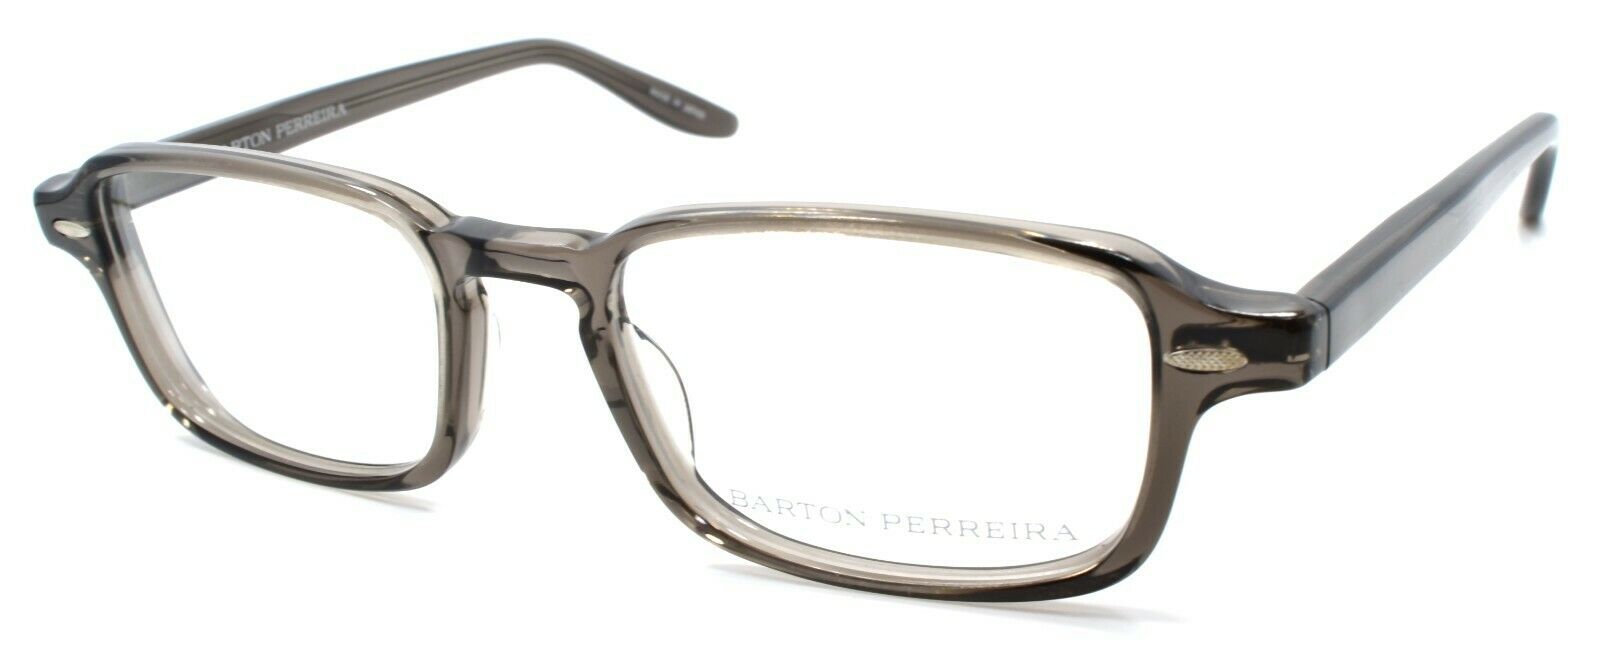 1-Barton Perreira Jeston DUS Unisex Eyeglasses Frames 50-19-145 Dusk Gray-IKSpecs